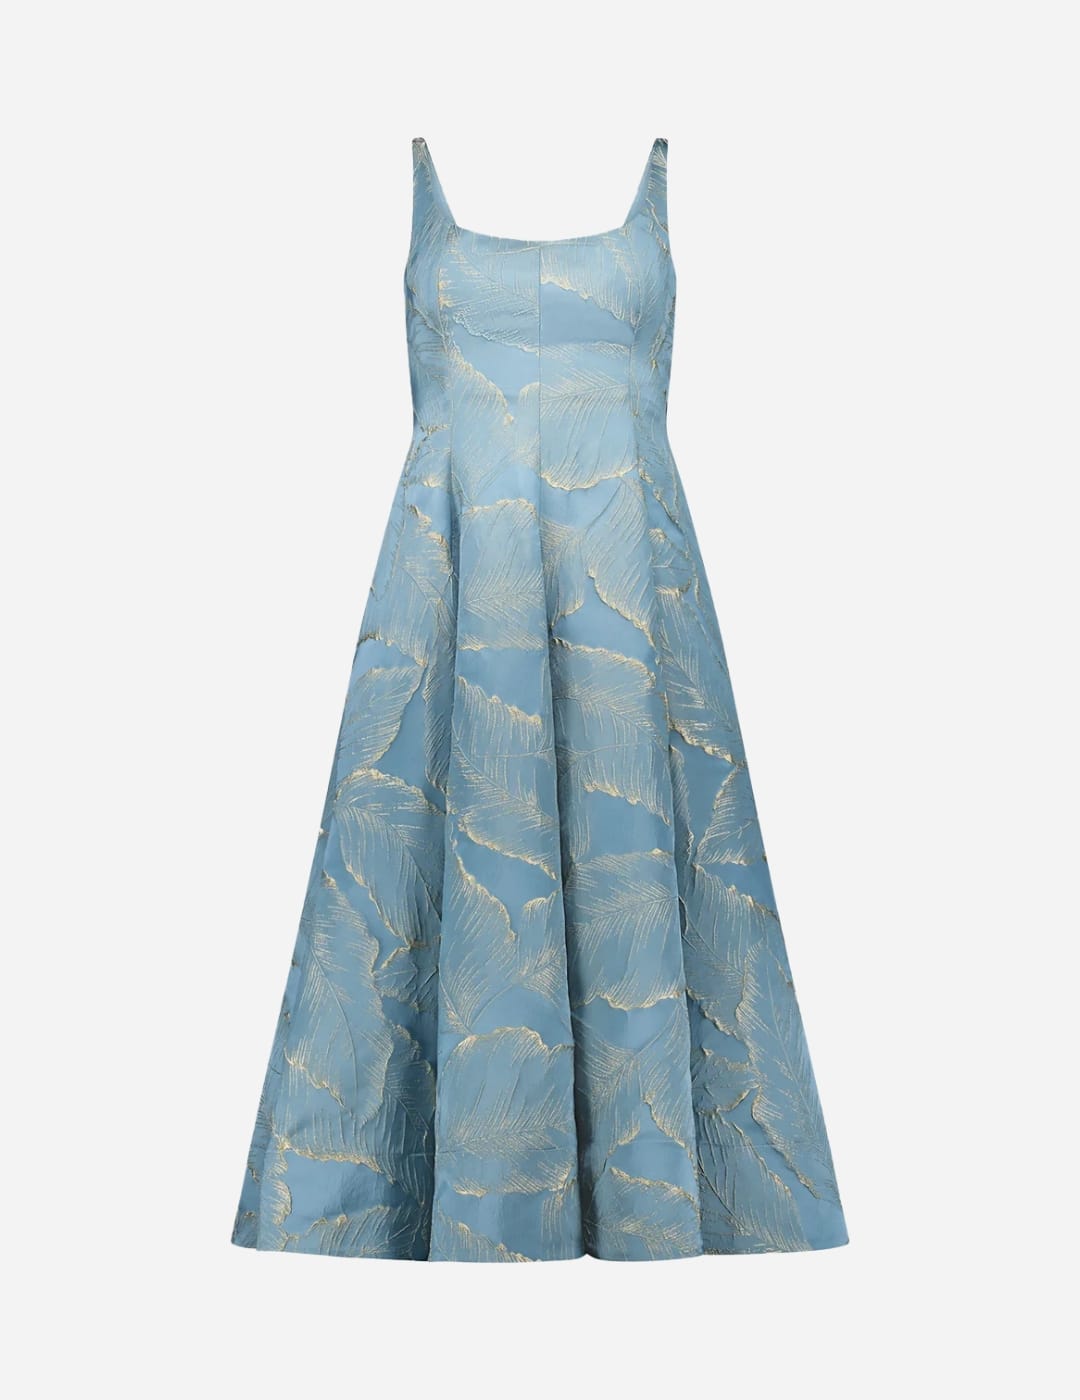 Caitlin Crisp 'Clementine' Dress in Duchess Blue, $659.